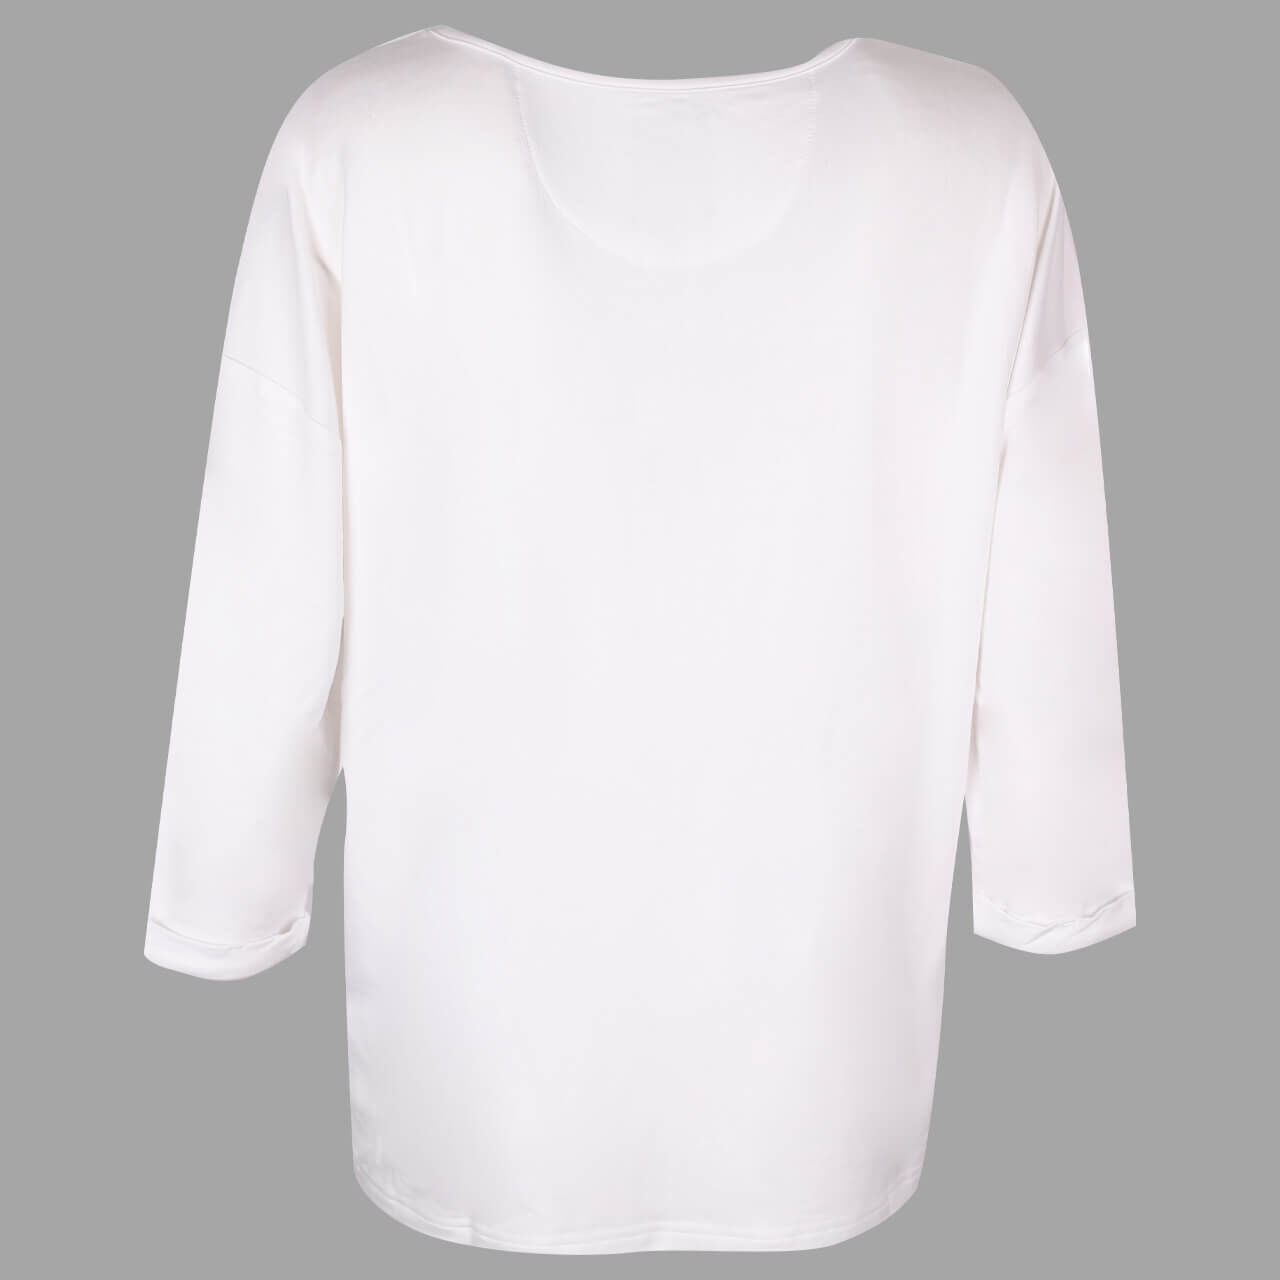 Soquesto Damen 3/4 Arm Shirt white with print